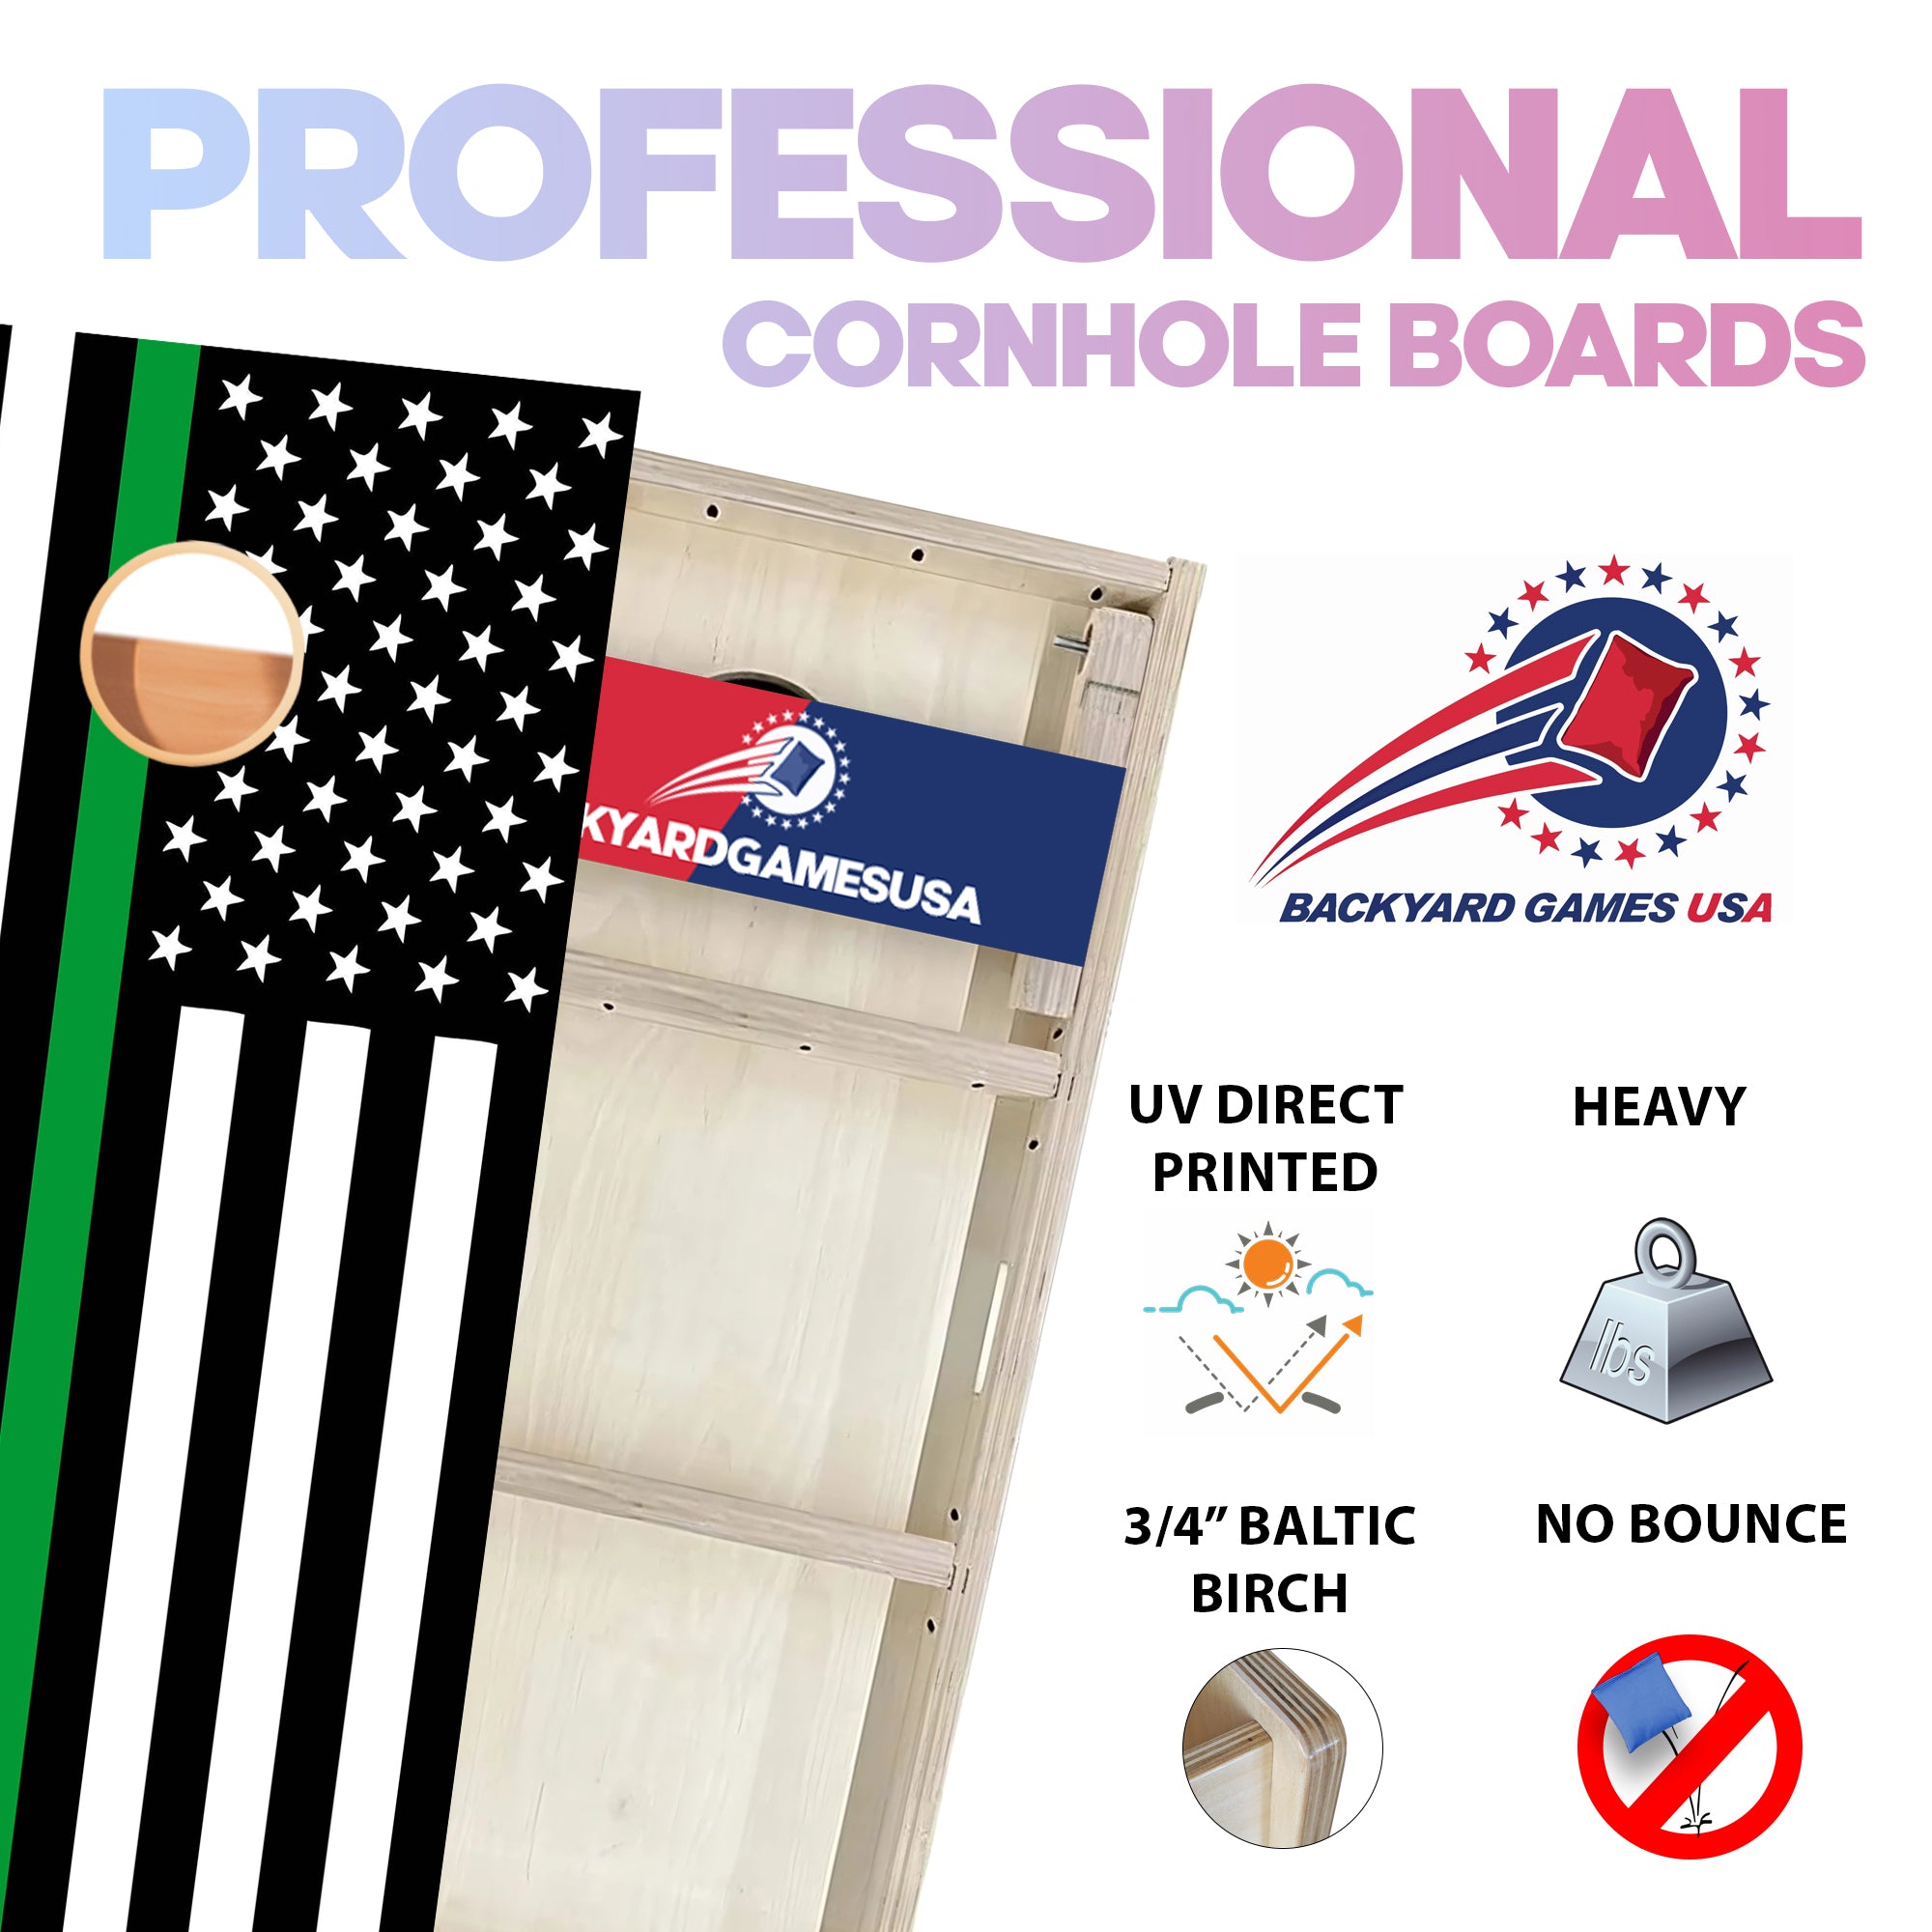 Green Line Professional Cornhole Boards